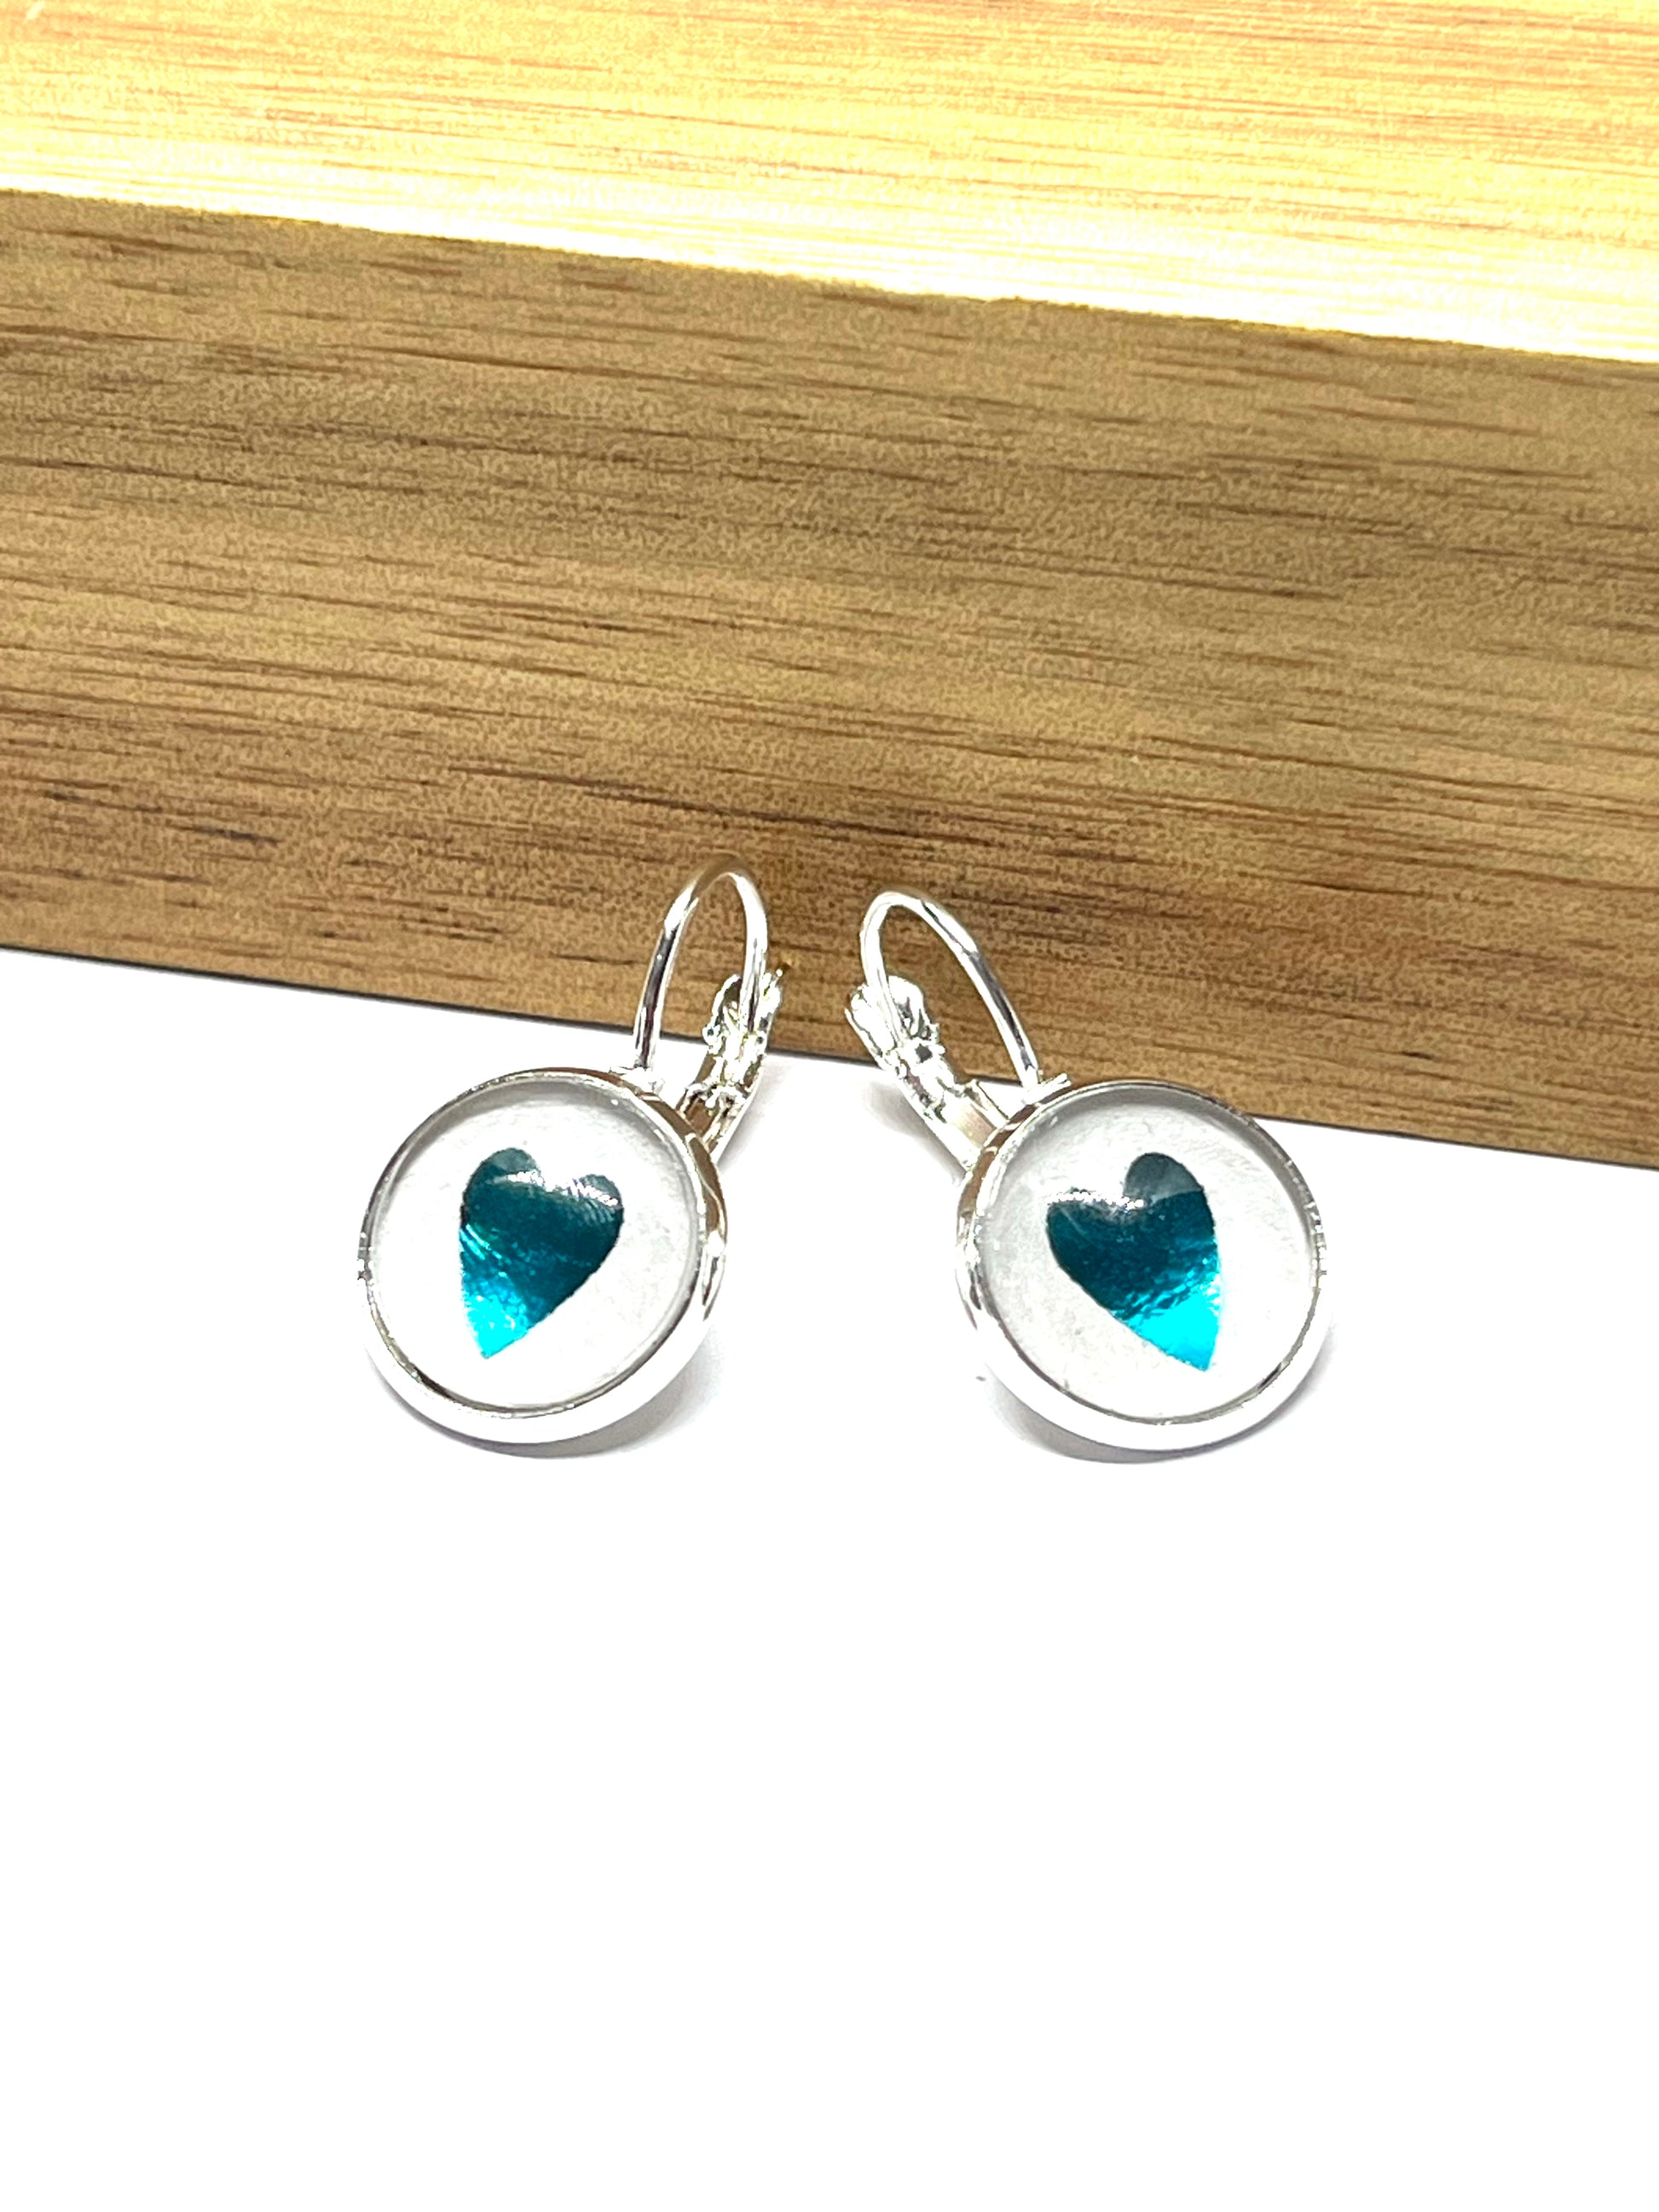 Metallic Aqua blue heart glass dome earrings in a silver setting